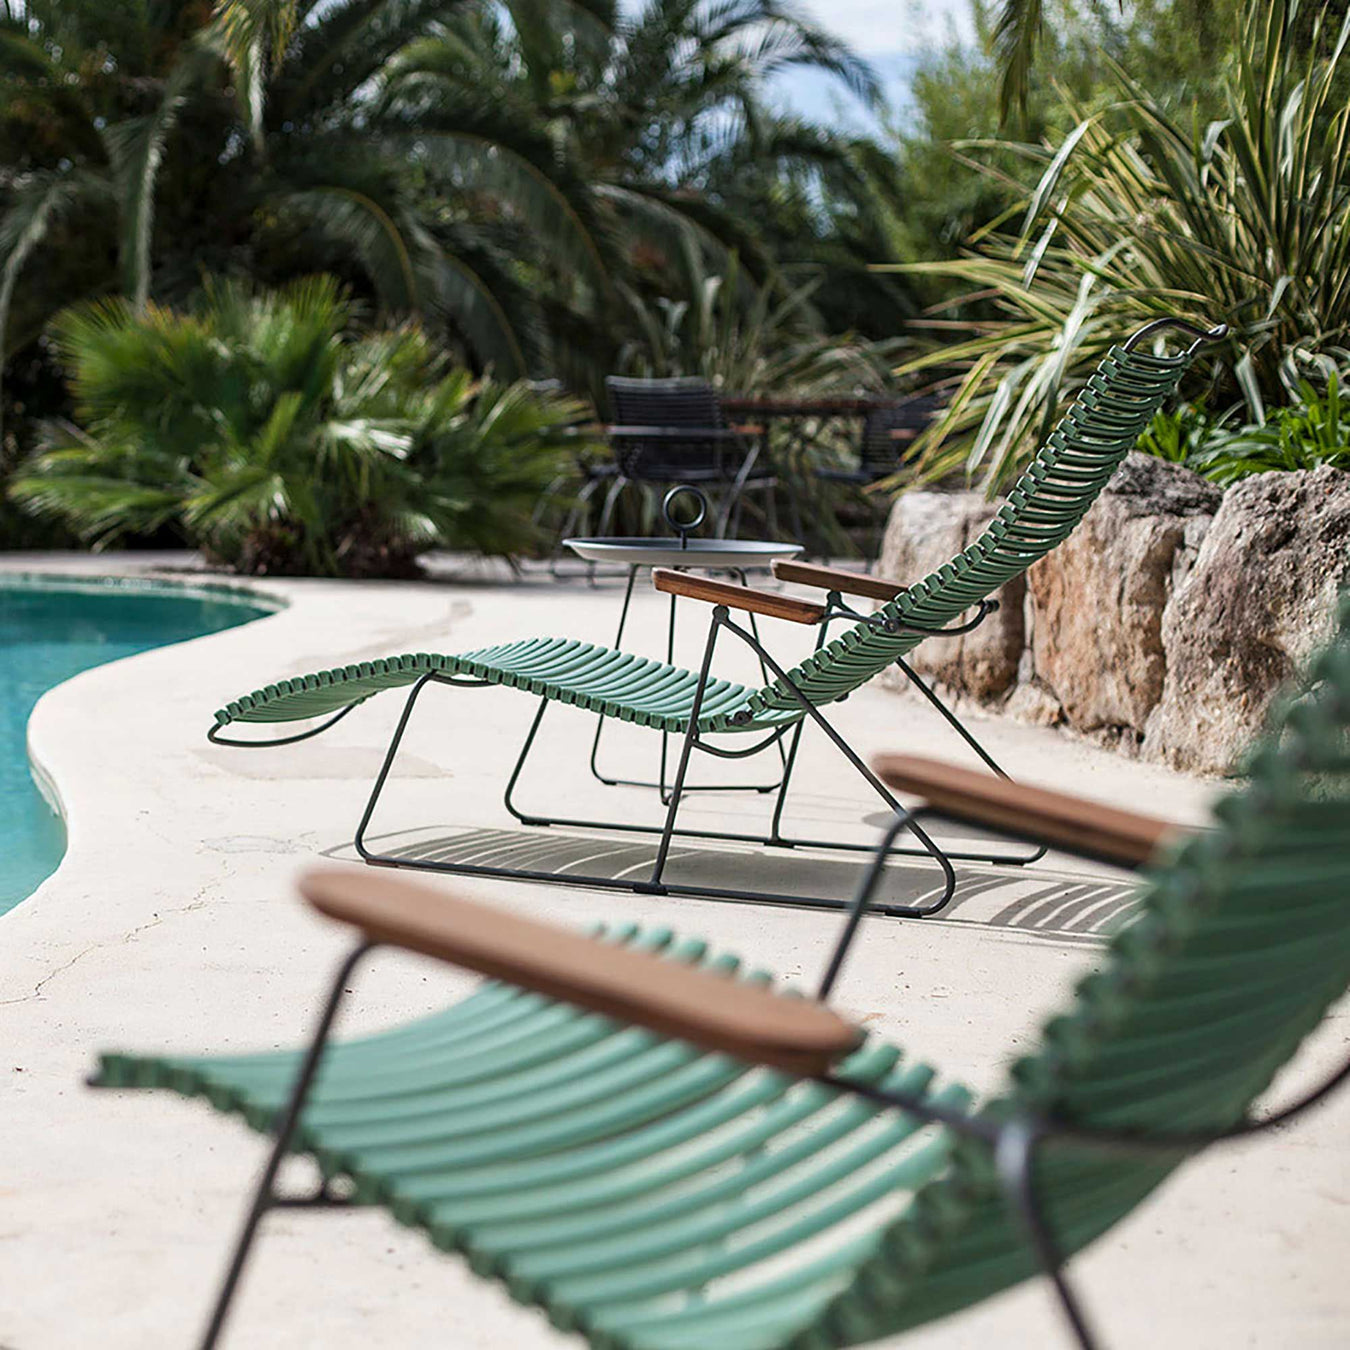 Outdoor Pool & Garden Chairs